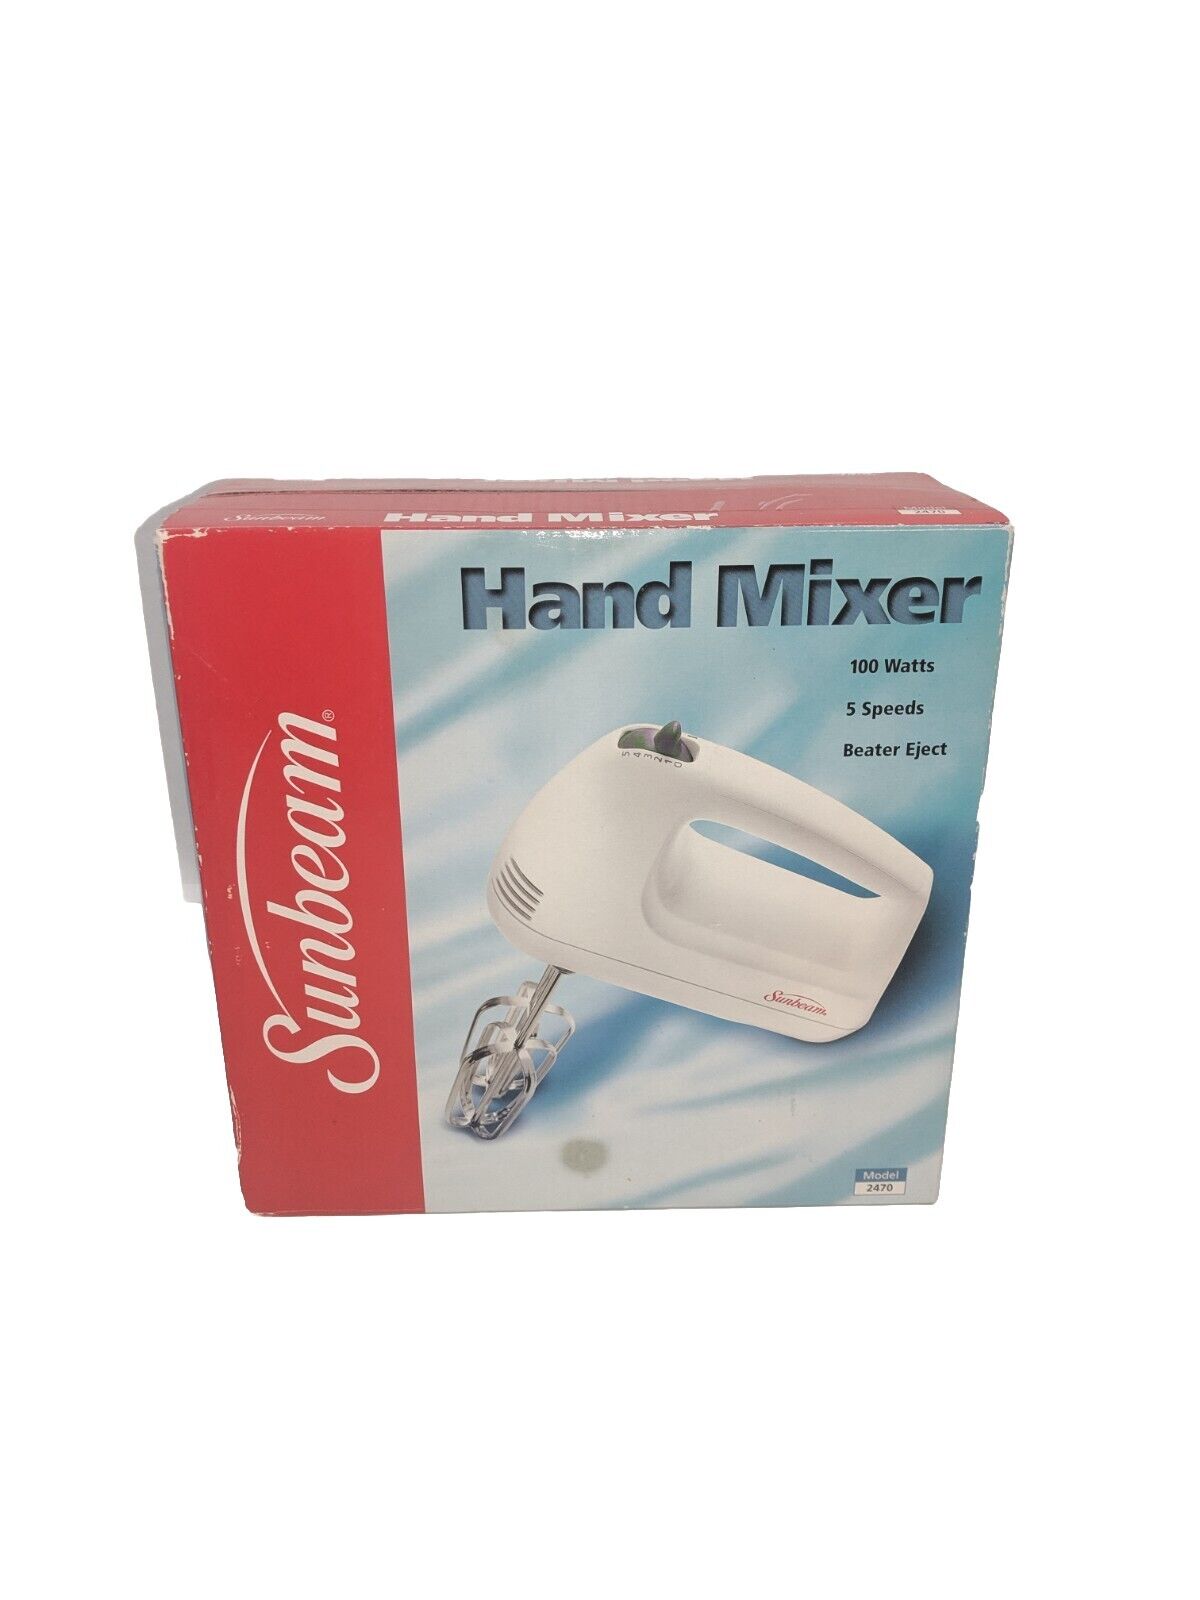 New Vintage Sunbeam Handheld Electric Corded Mixer Blender Model 2470 Sealed🔥